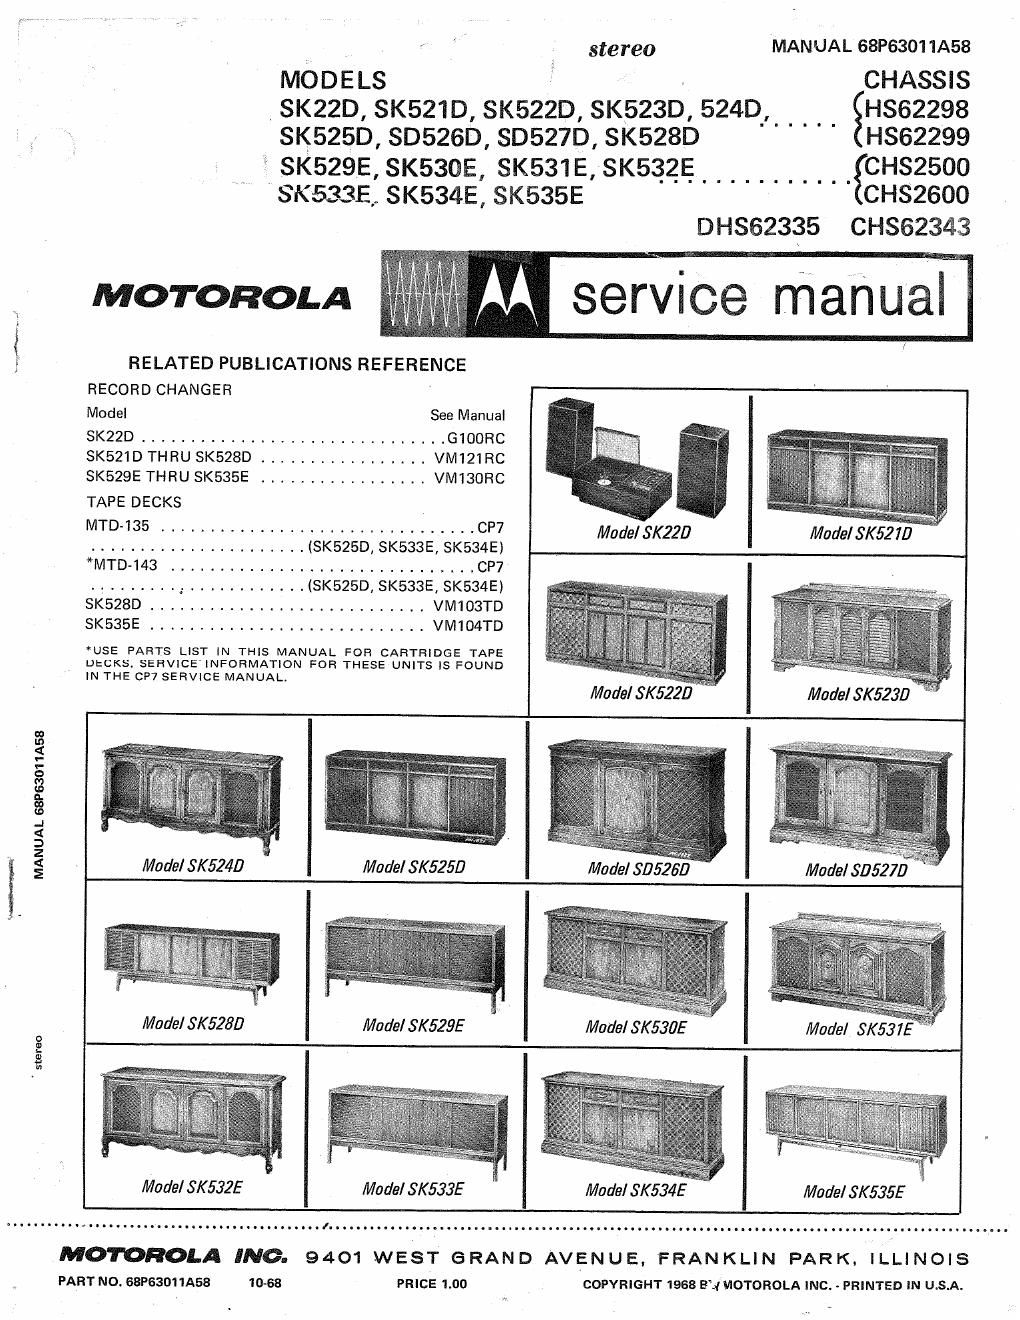 motorola sk 526 d service manual